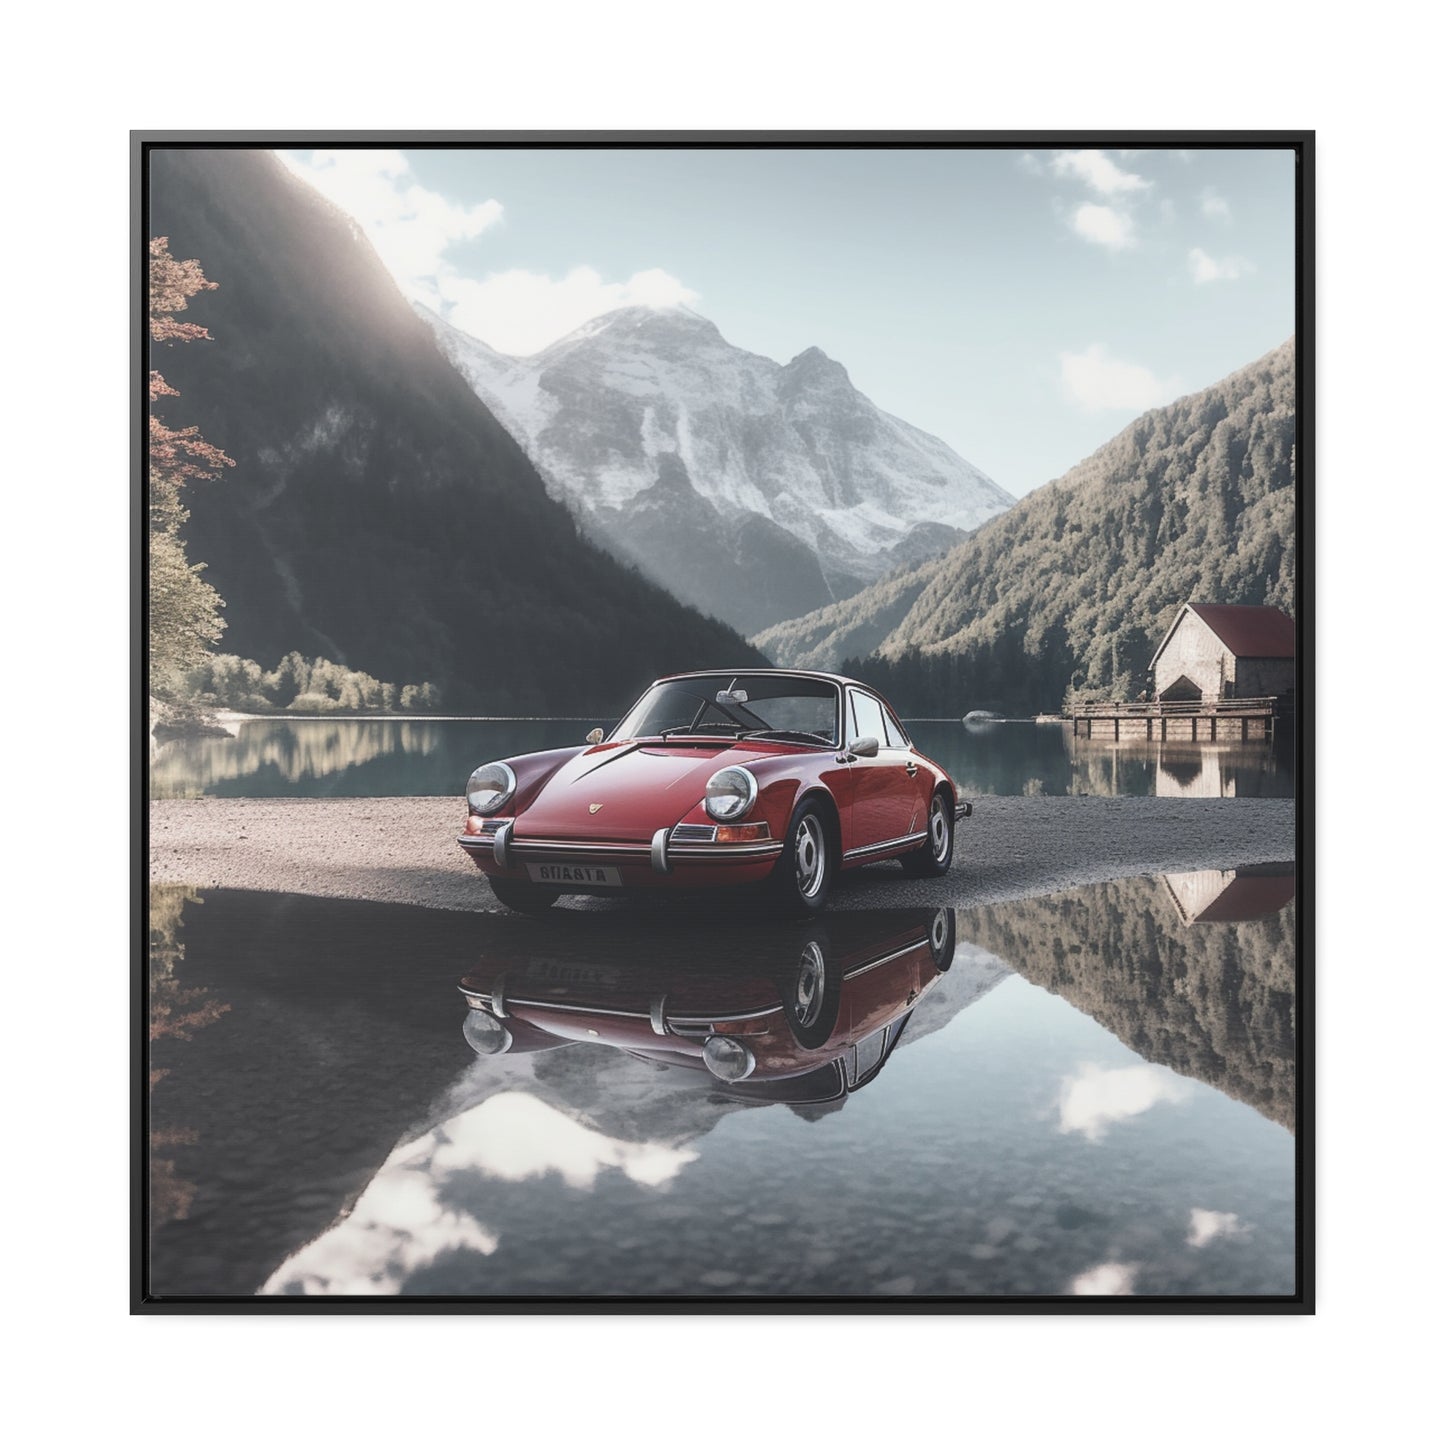 Gallery Canvas Wraps, Square Frame Porsche Lake 4